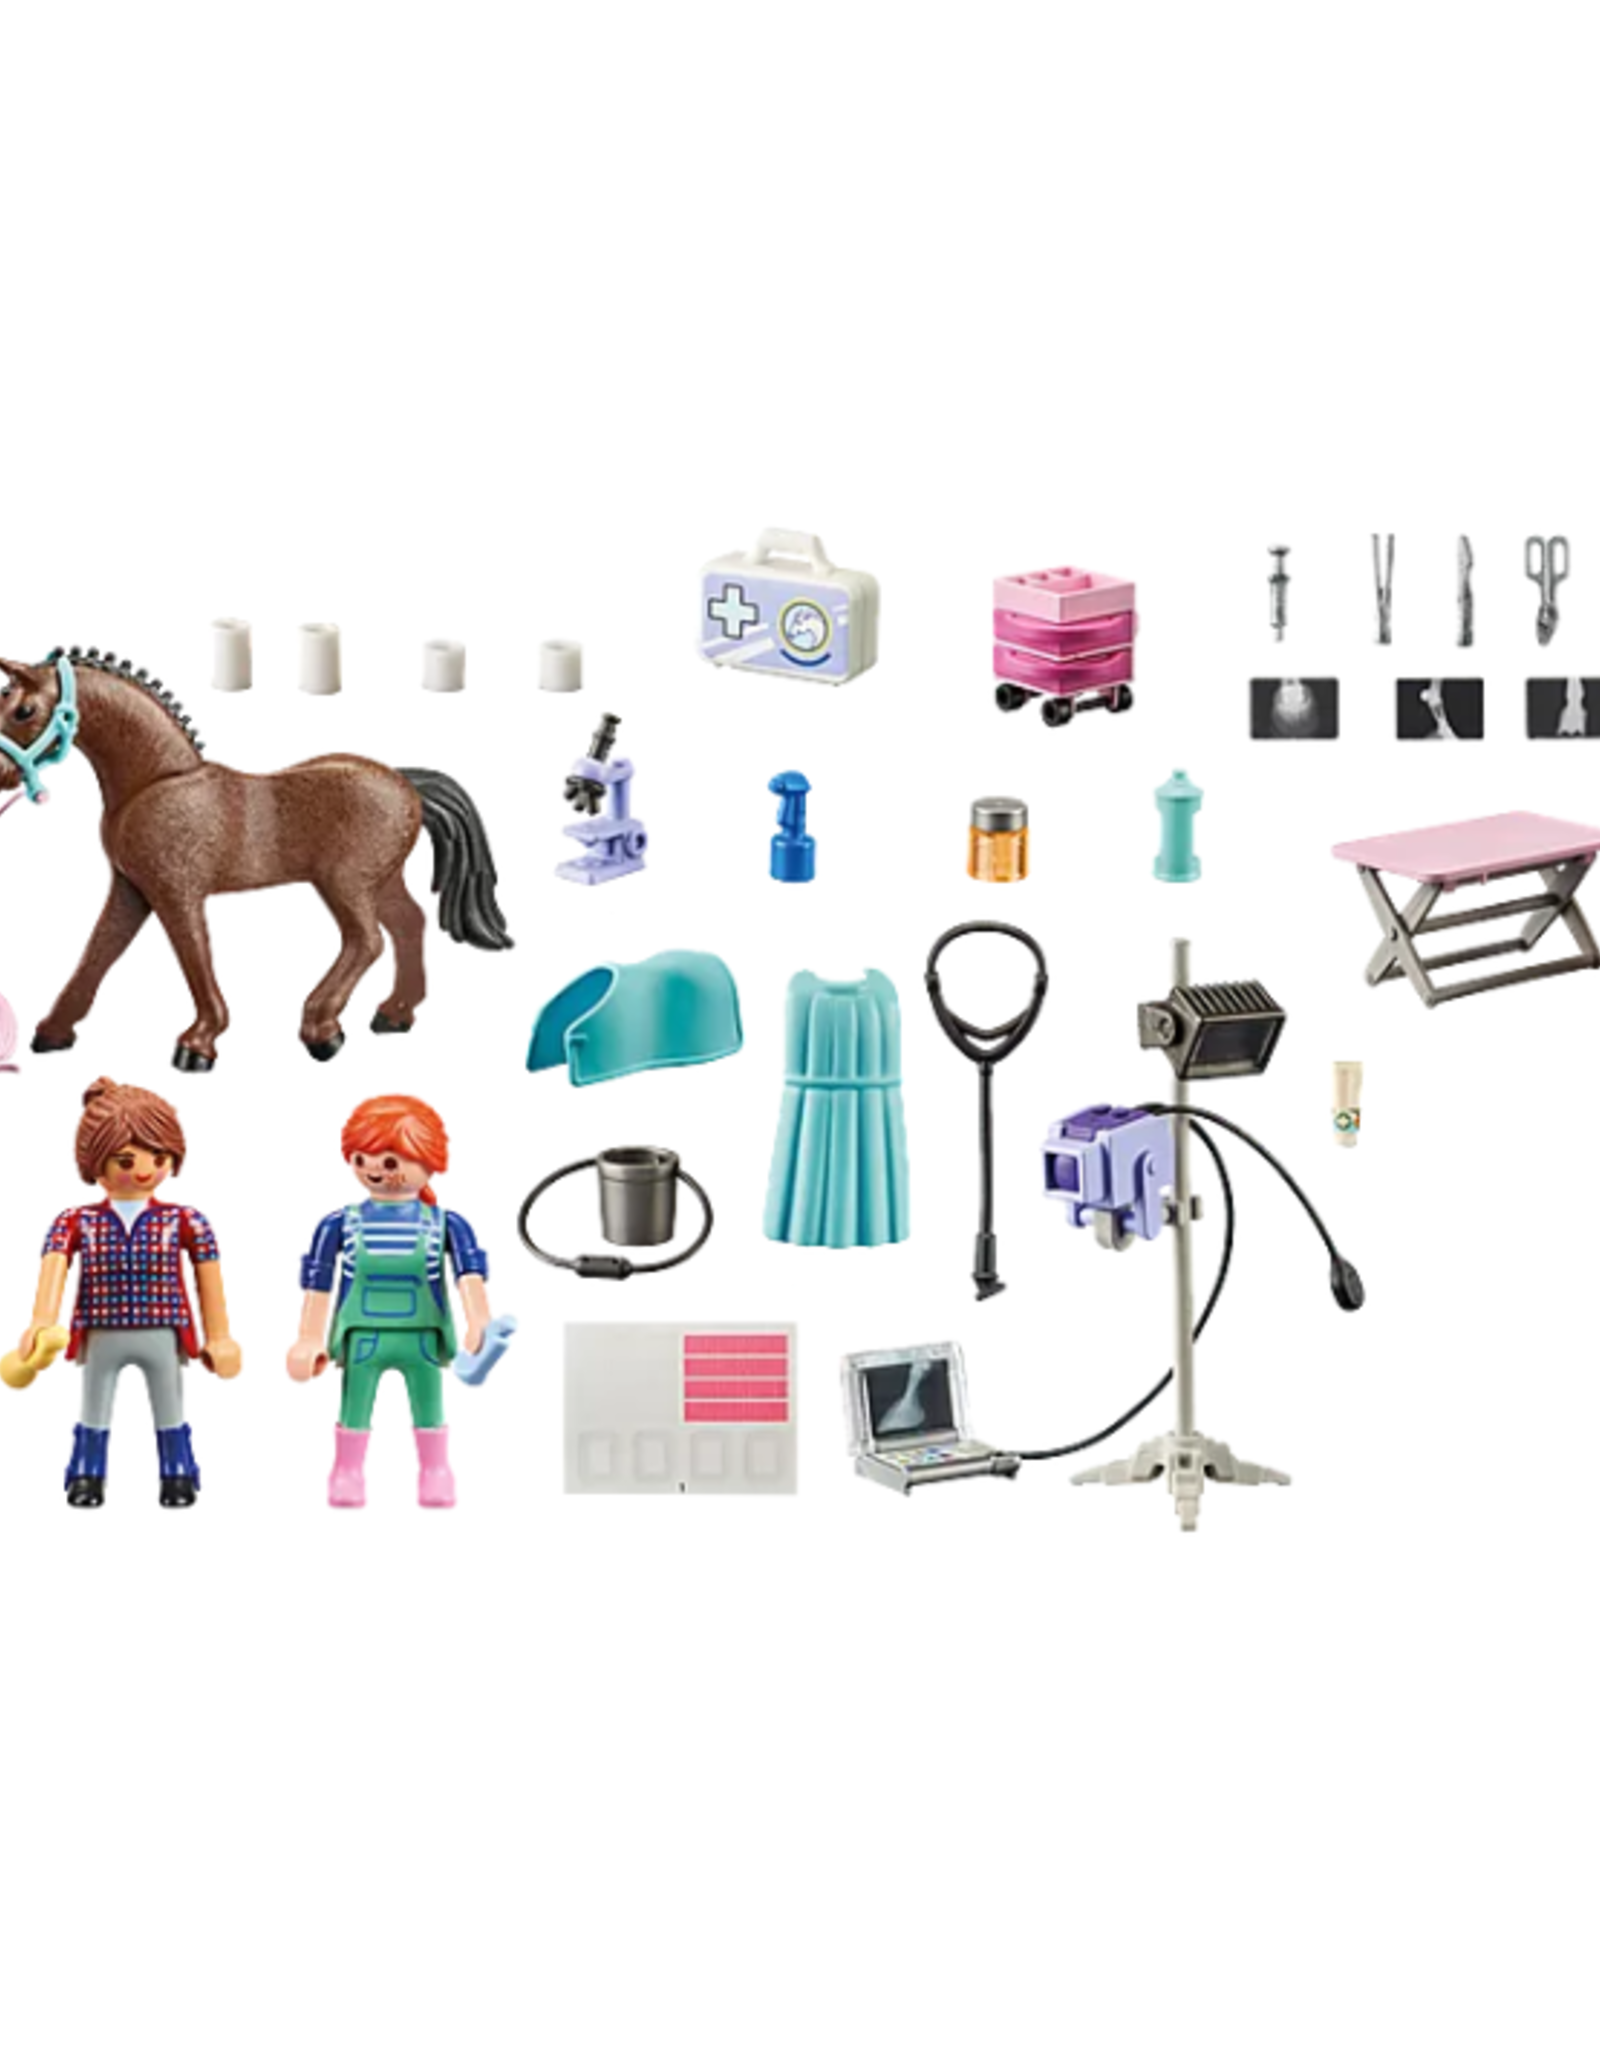 Playmobil Playmobil - Country - 71241 - Horse Veterinarian